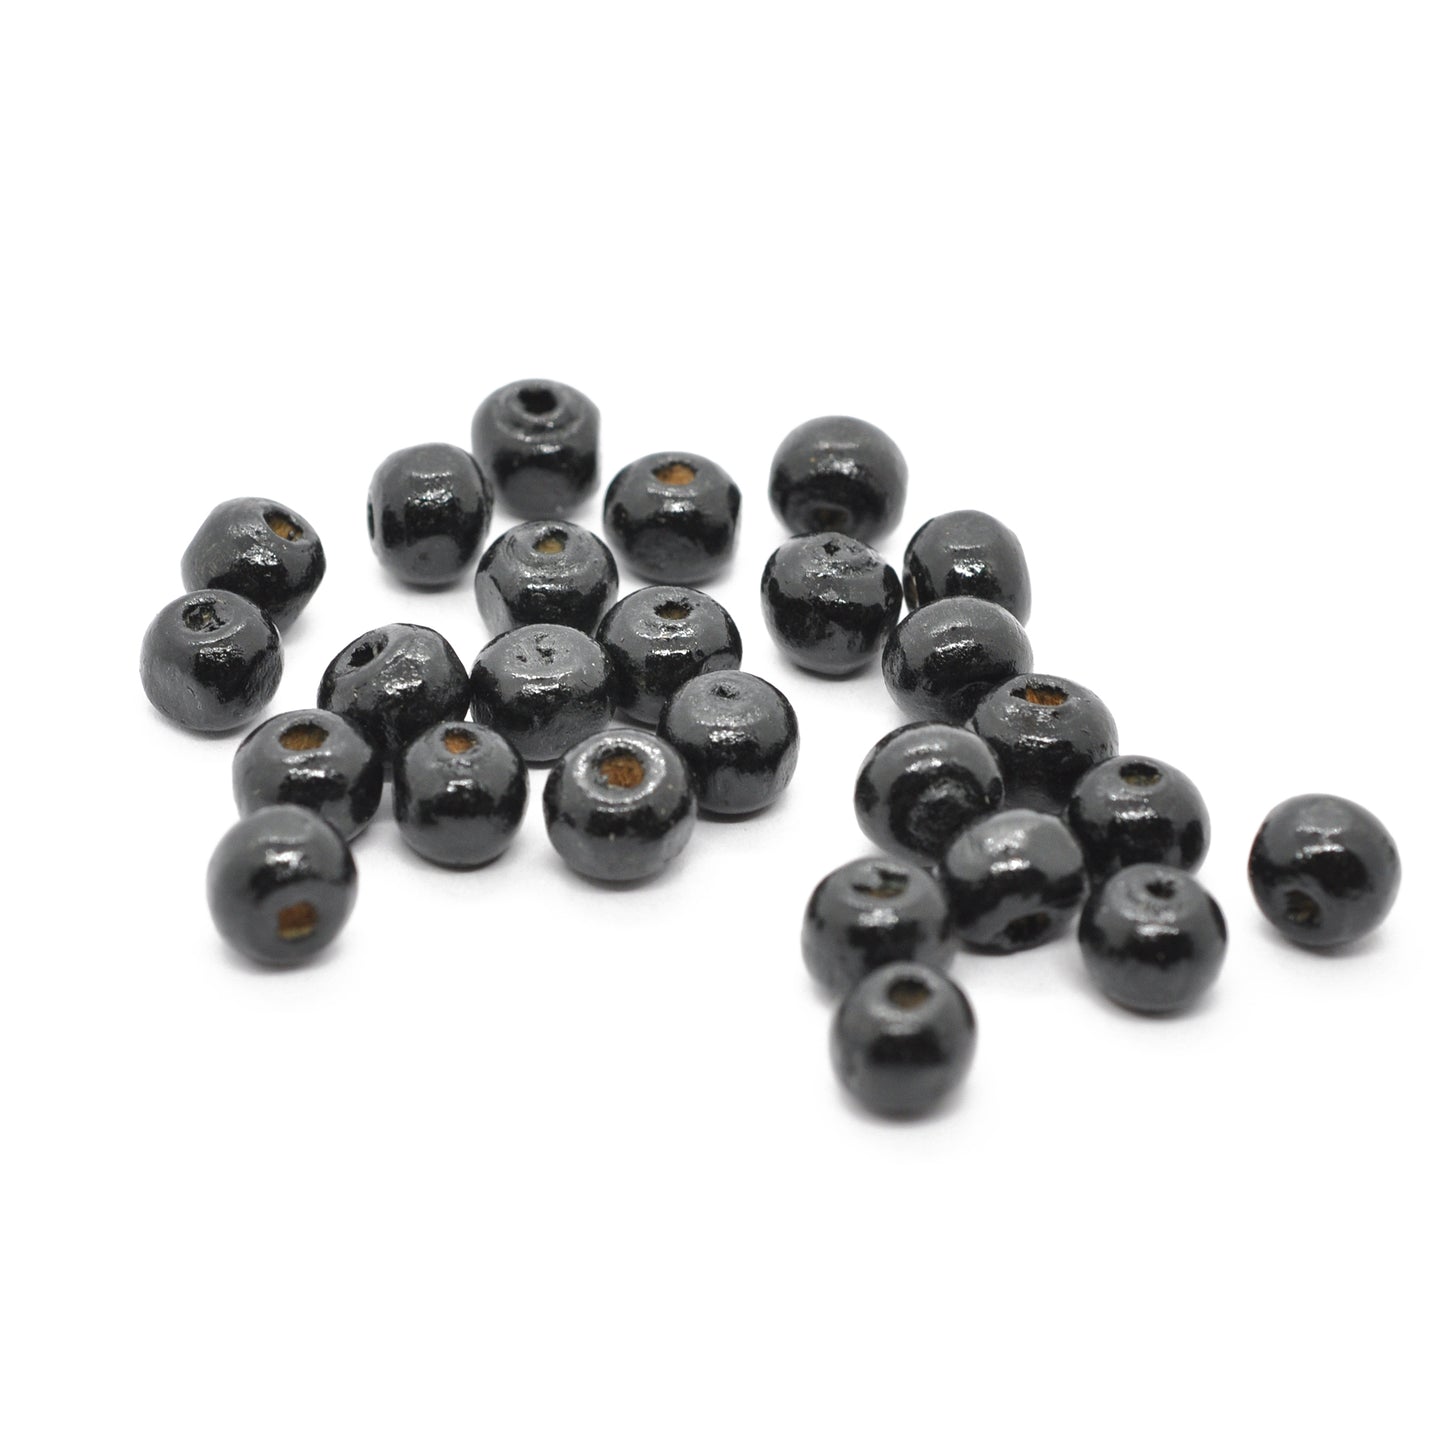 Wooden beads / black / 100 pcs. Ø 7 mm